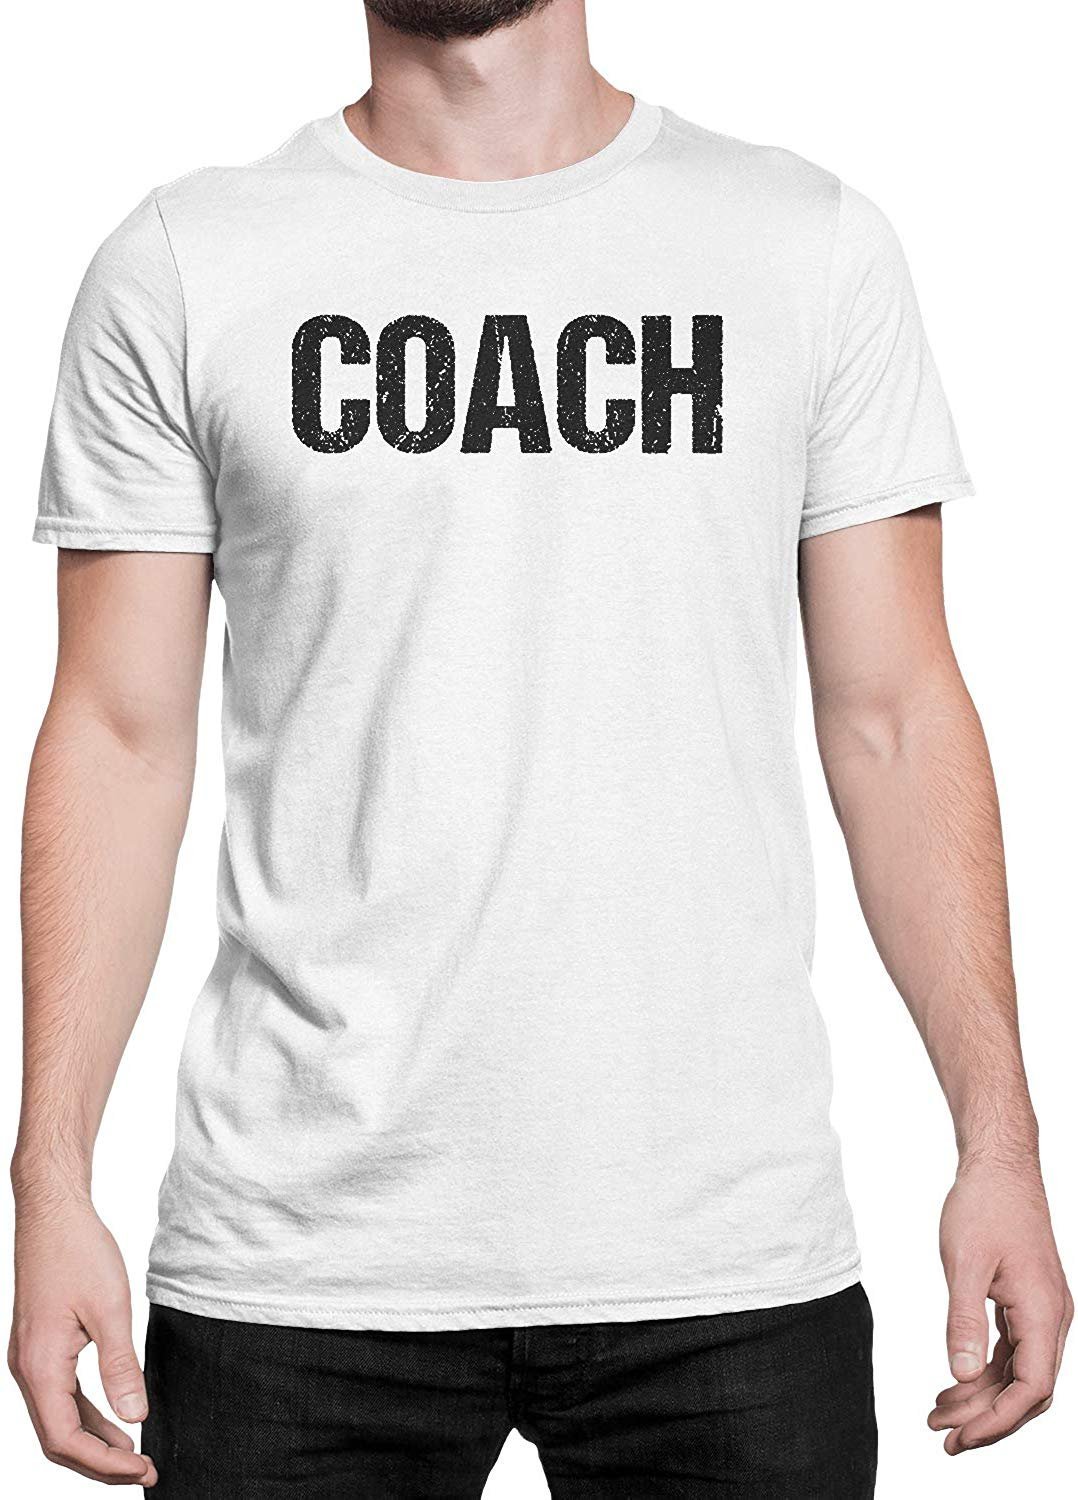 Coach T-Shirt Sports Coaching Tee Shirt (White & Black, Distressed)